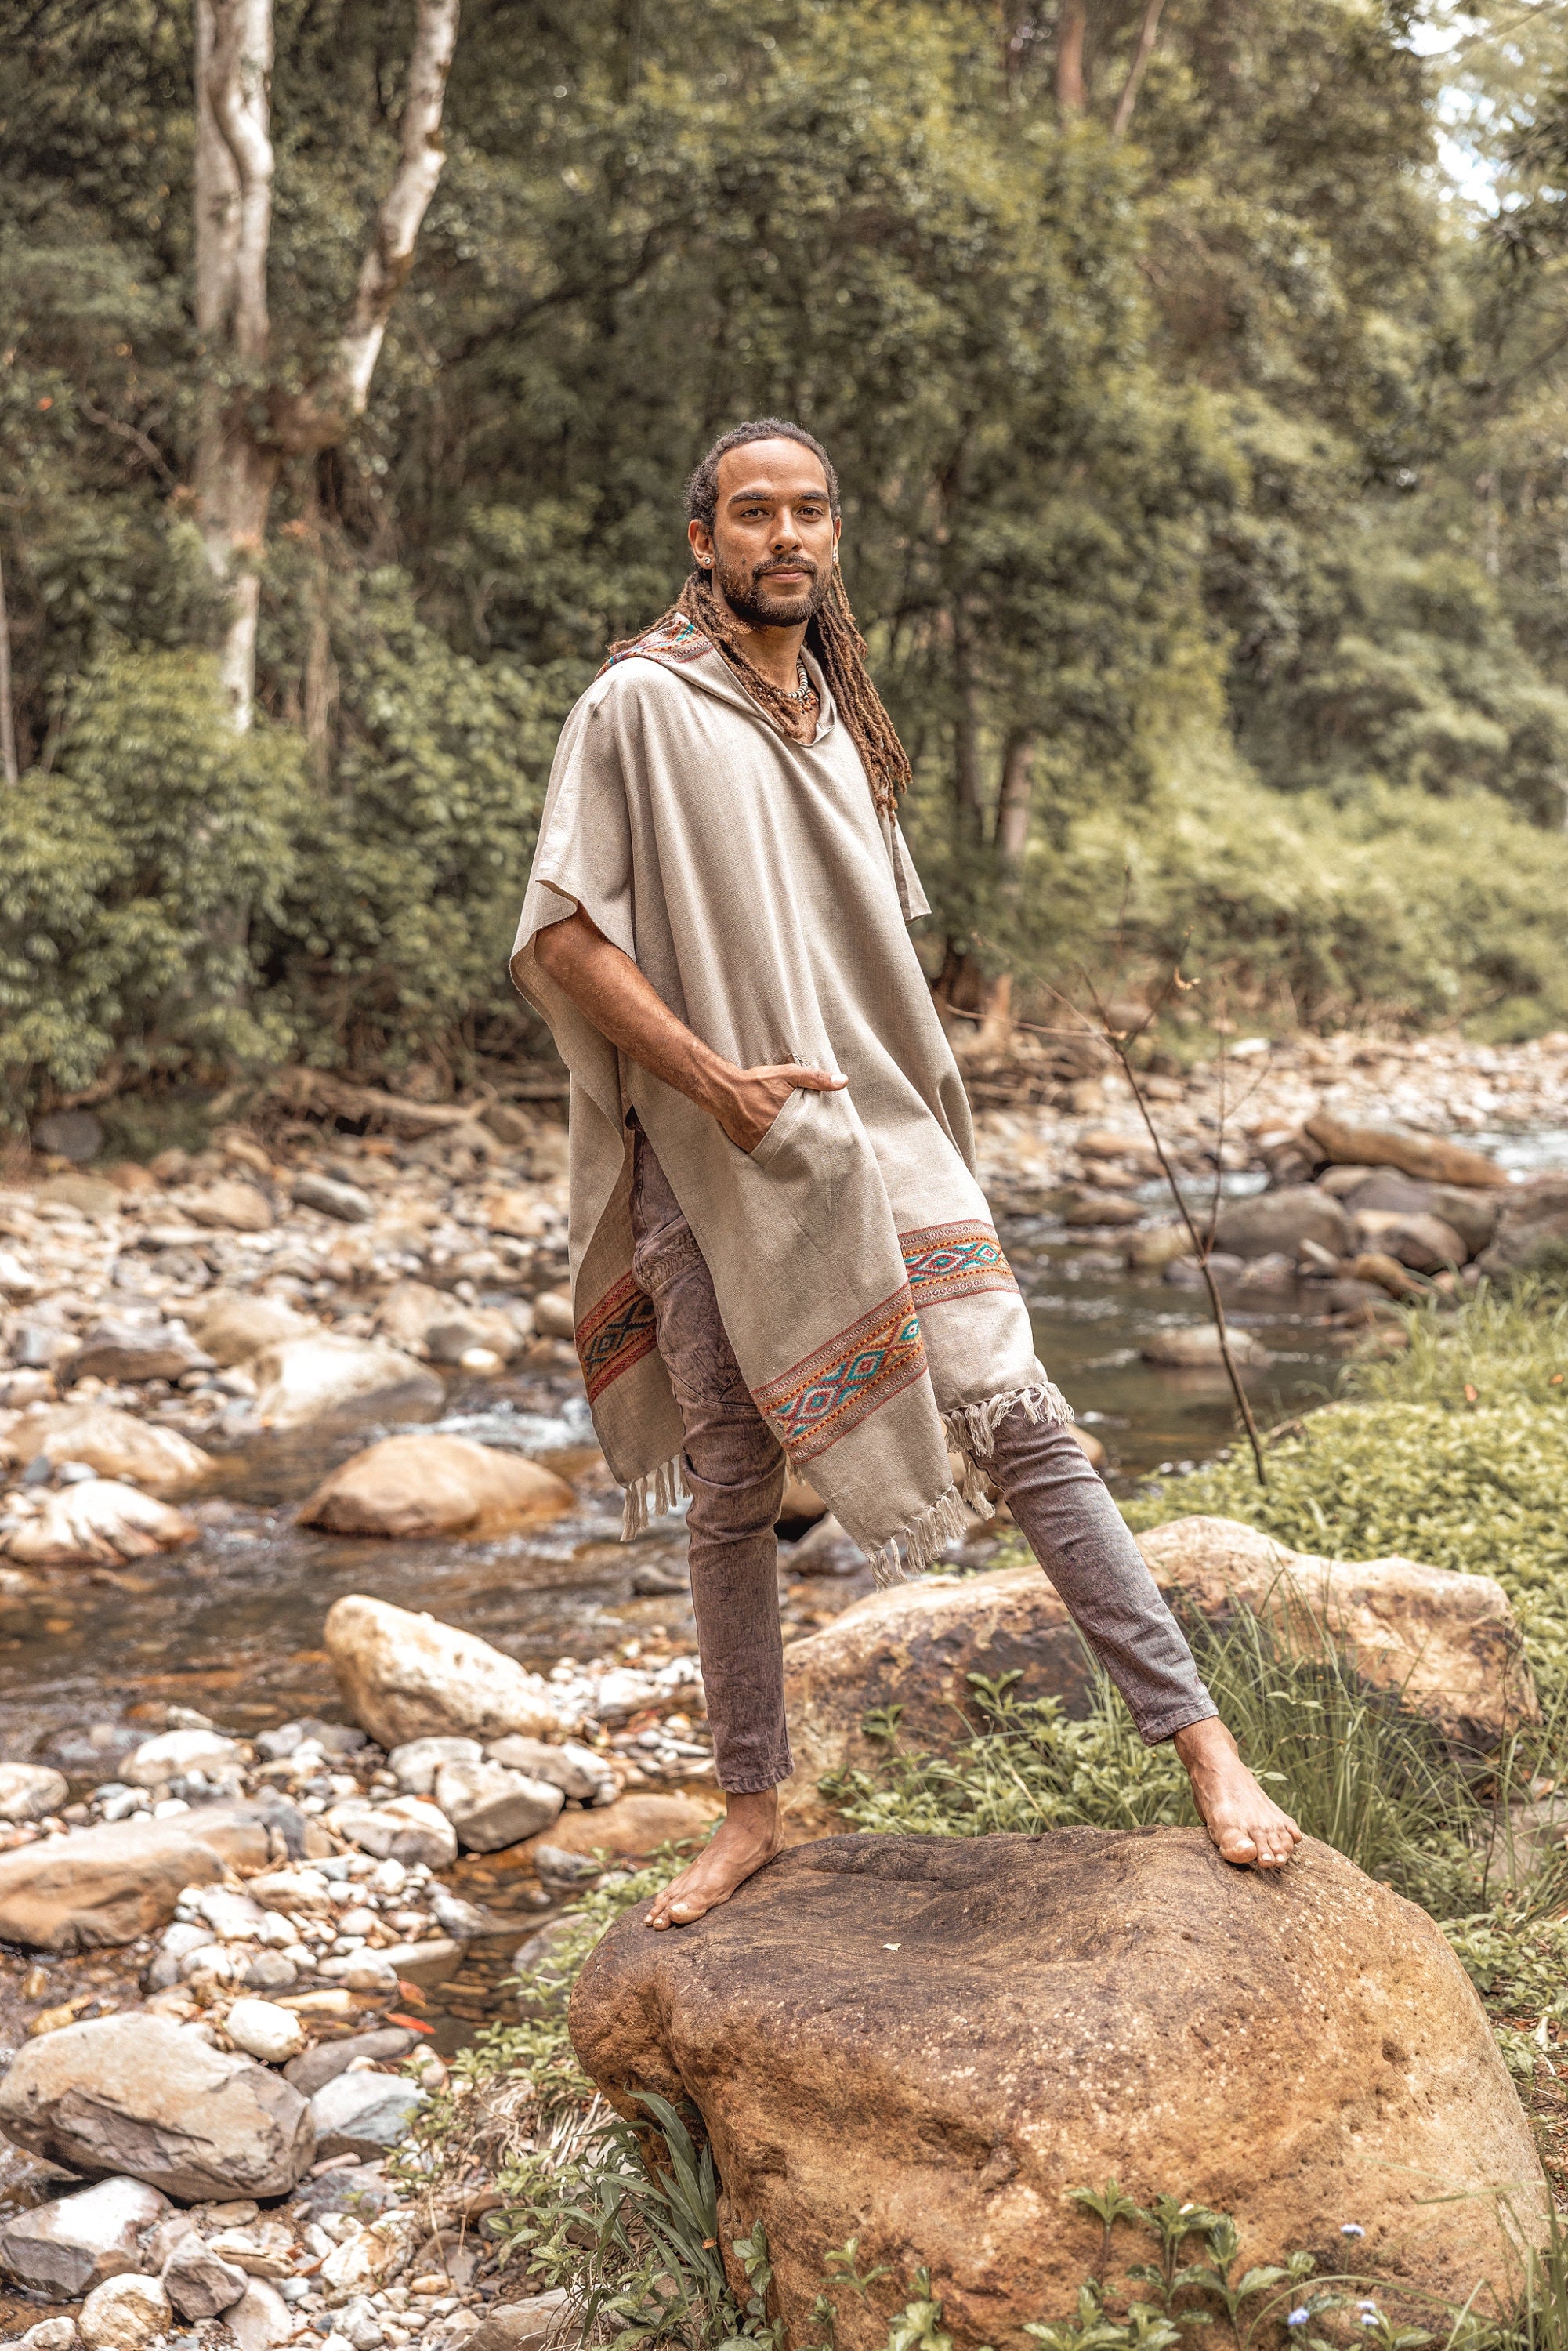 UPEKKHA Grey Mens Hooded Poncho Long Cashmere and Acrylic Wool with Tribal Embroidery, Large Hood, Pockets, Hippie, Primitive, Boho, AJJAYA